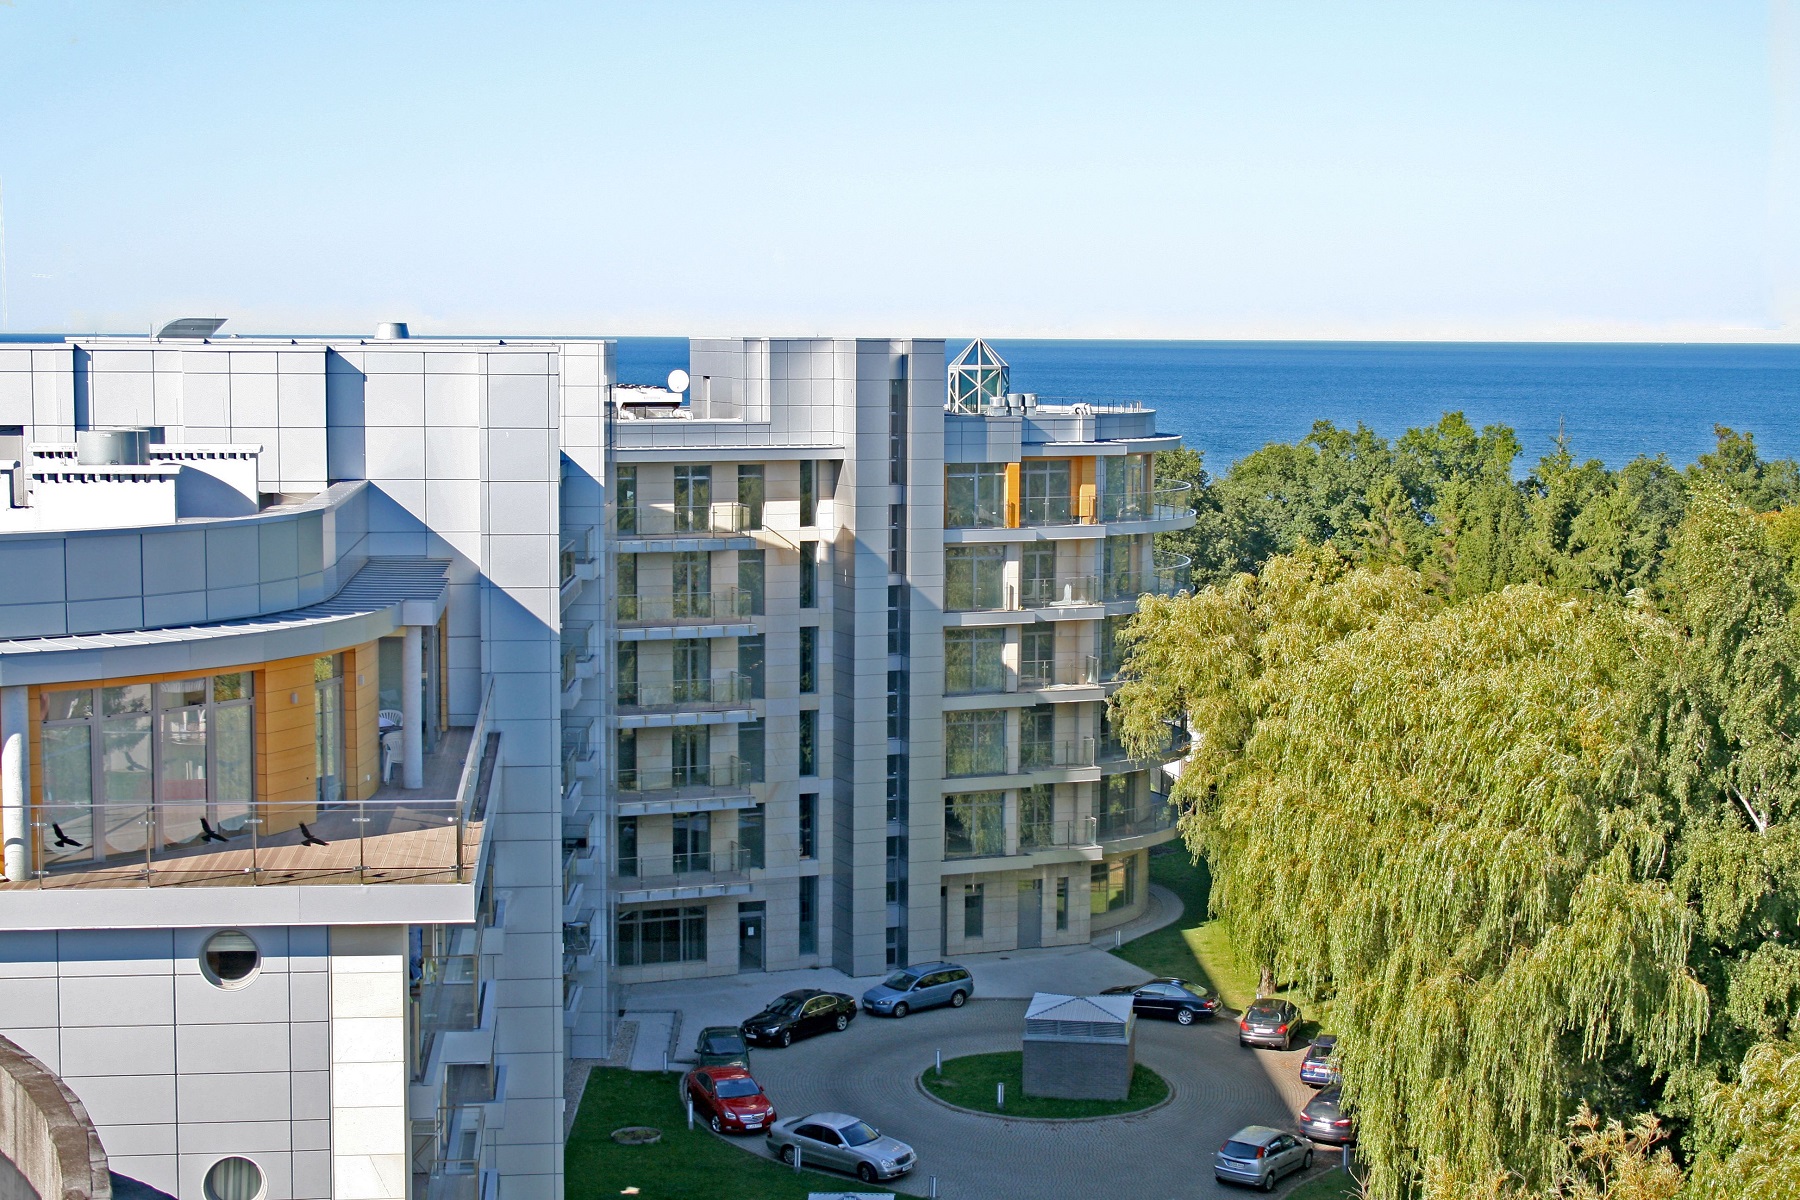 01-Zdrojowa Invest-DIUNE HOTEL-and RESORT-KOLOBRZEG-Poland-KOMPLEKS-BUD.2-WIDOK NA MORZE z DACHU-COMPLEX-BUILDING 2-SEA VIEW from the ROOF 1 23.09.2013 MidRes